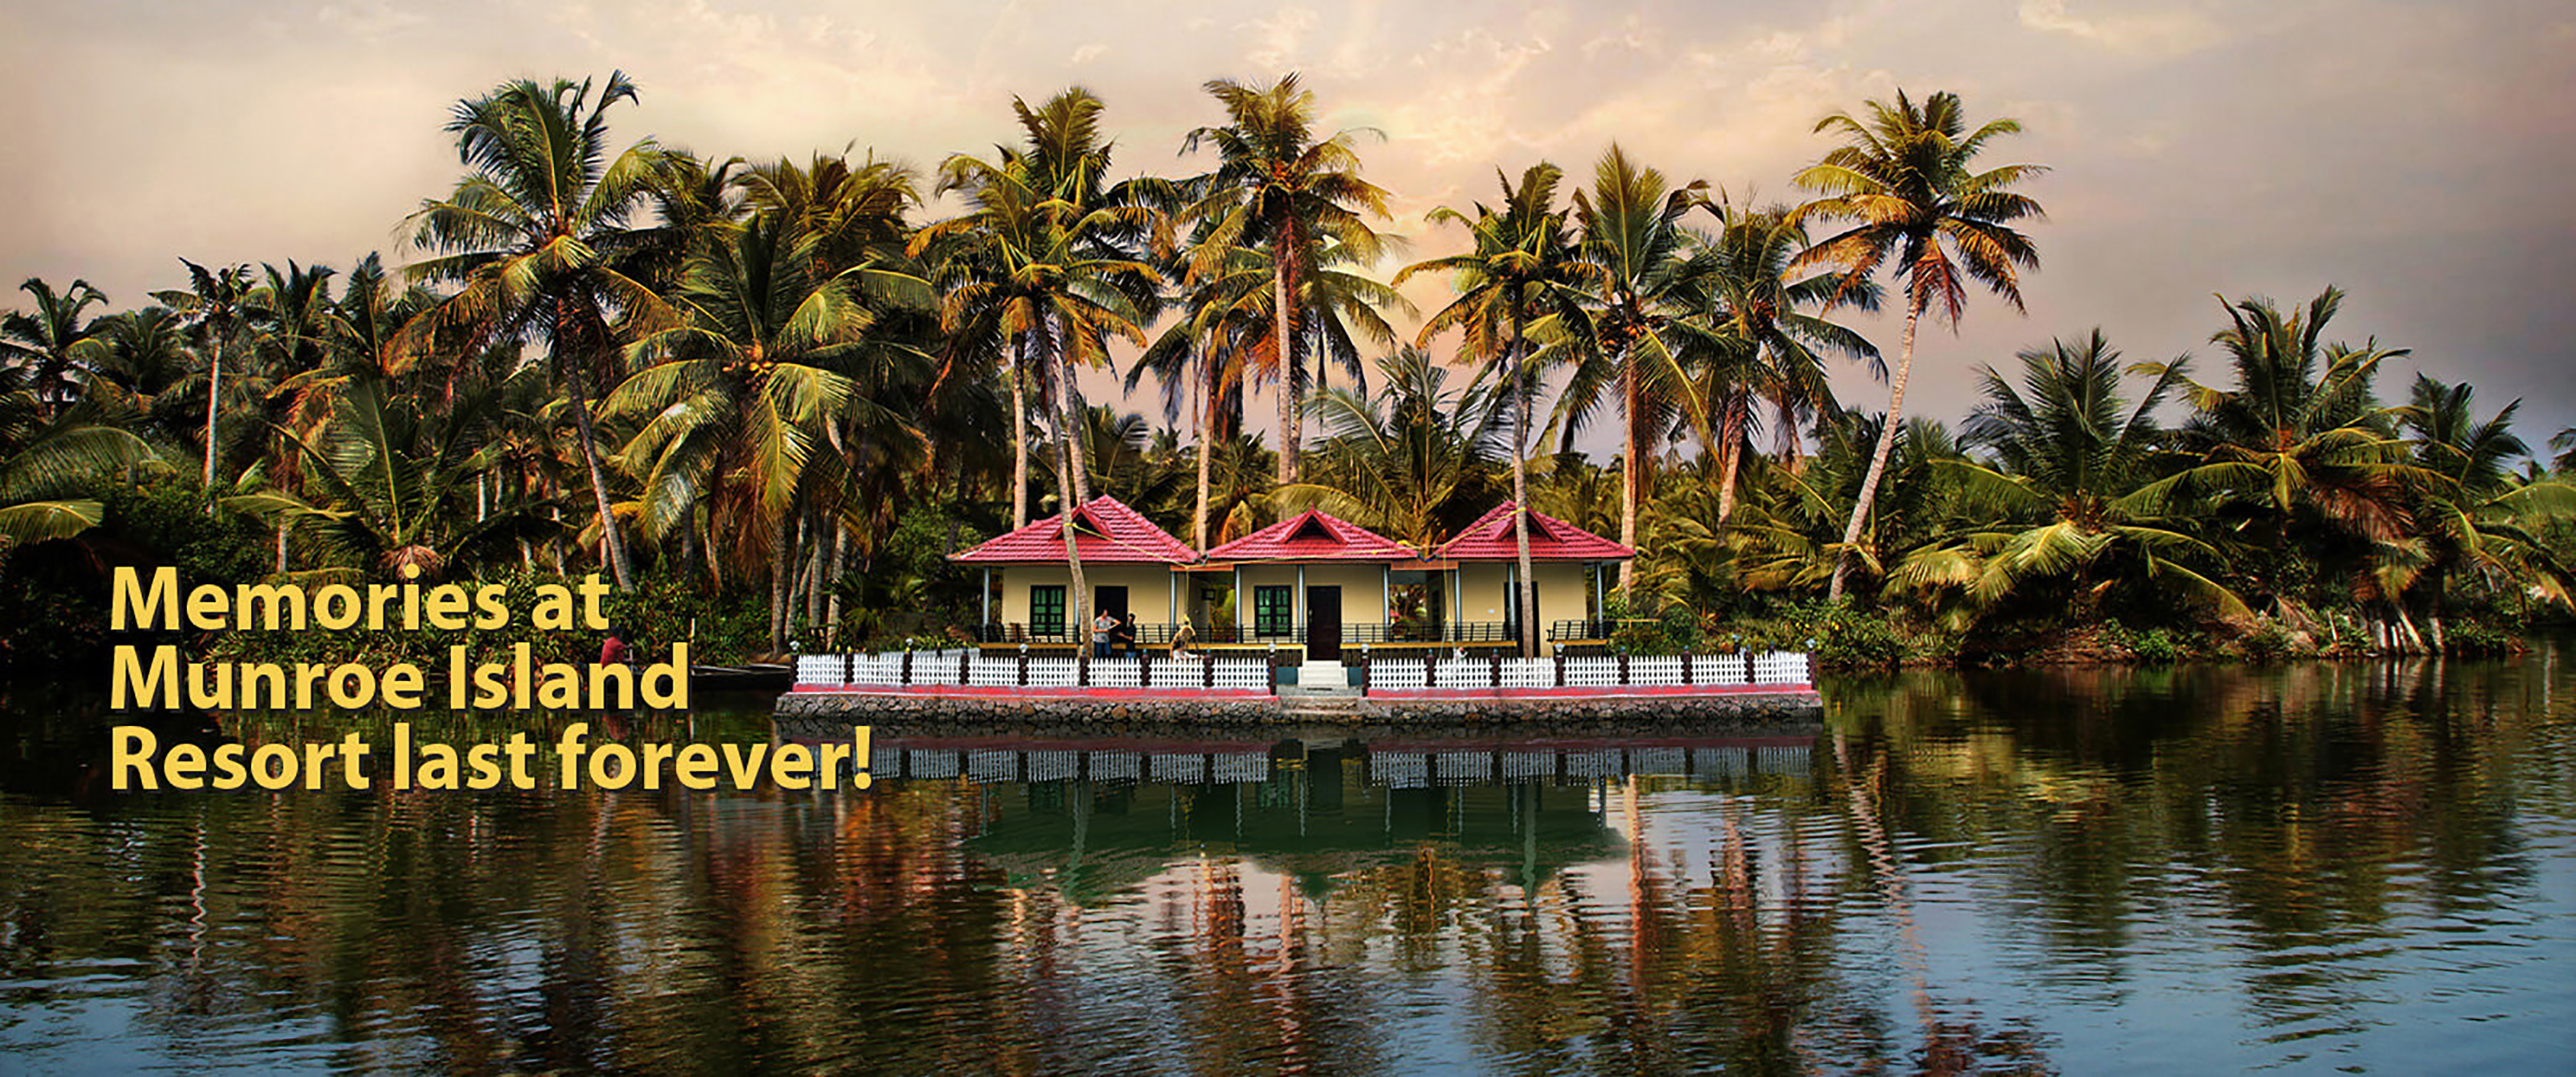 Kerala Backwaters Island Resorts,Lake Resorts Kerala,Best Resorts in Kerala